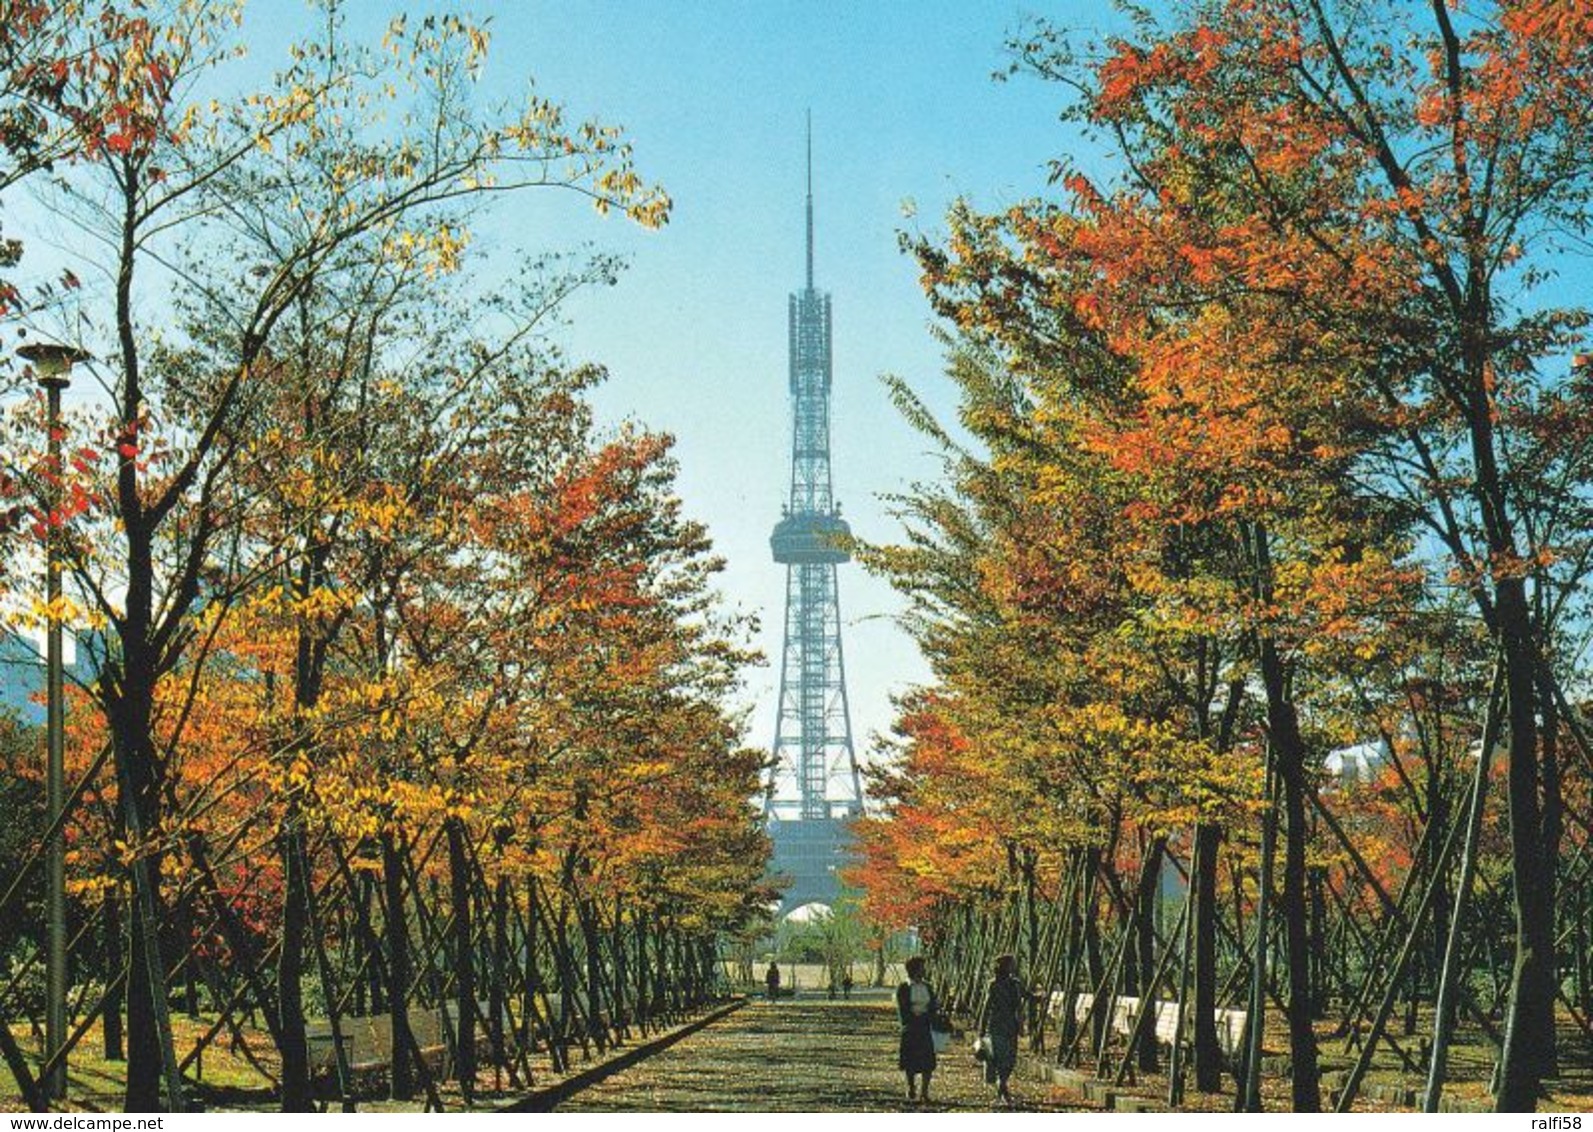 1 AK Japan * Der Erste In Japan Gebaute Fernsehturm (1953/54) Befindet Sich In Nagoya - Ein 180 Meter Hoher Sendeturm * - Nagoya